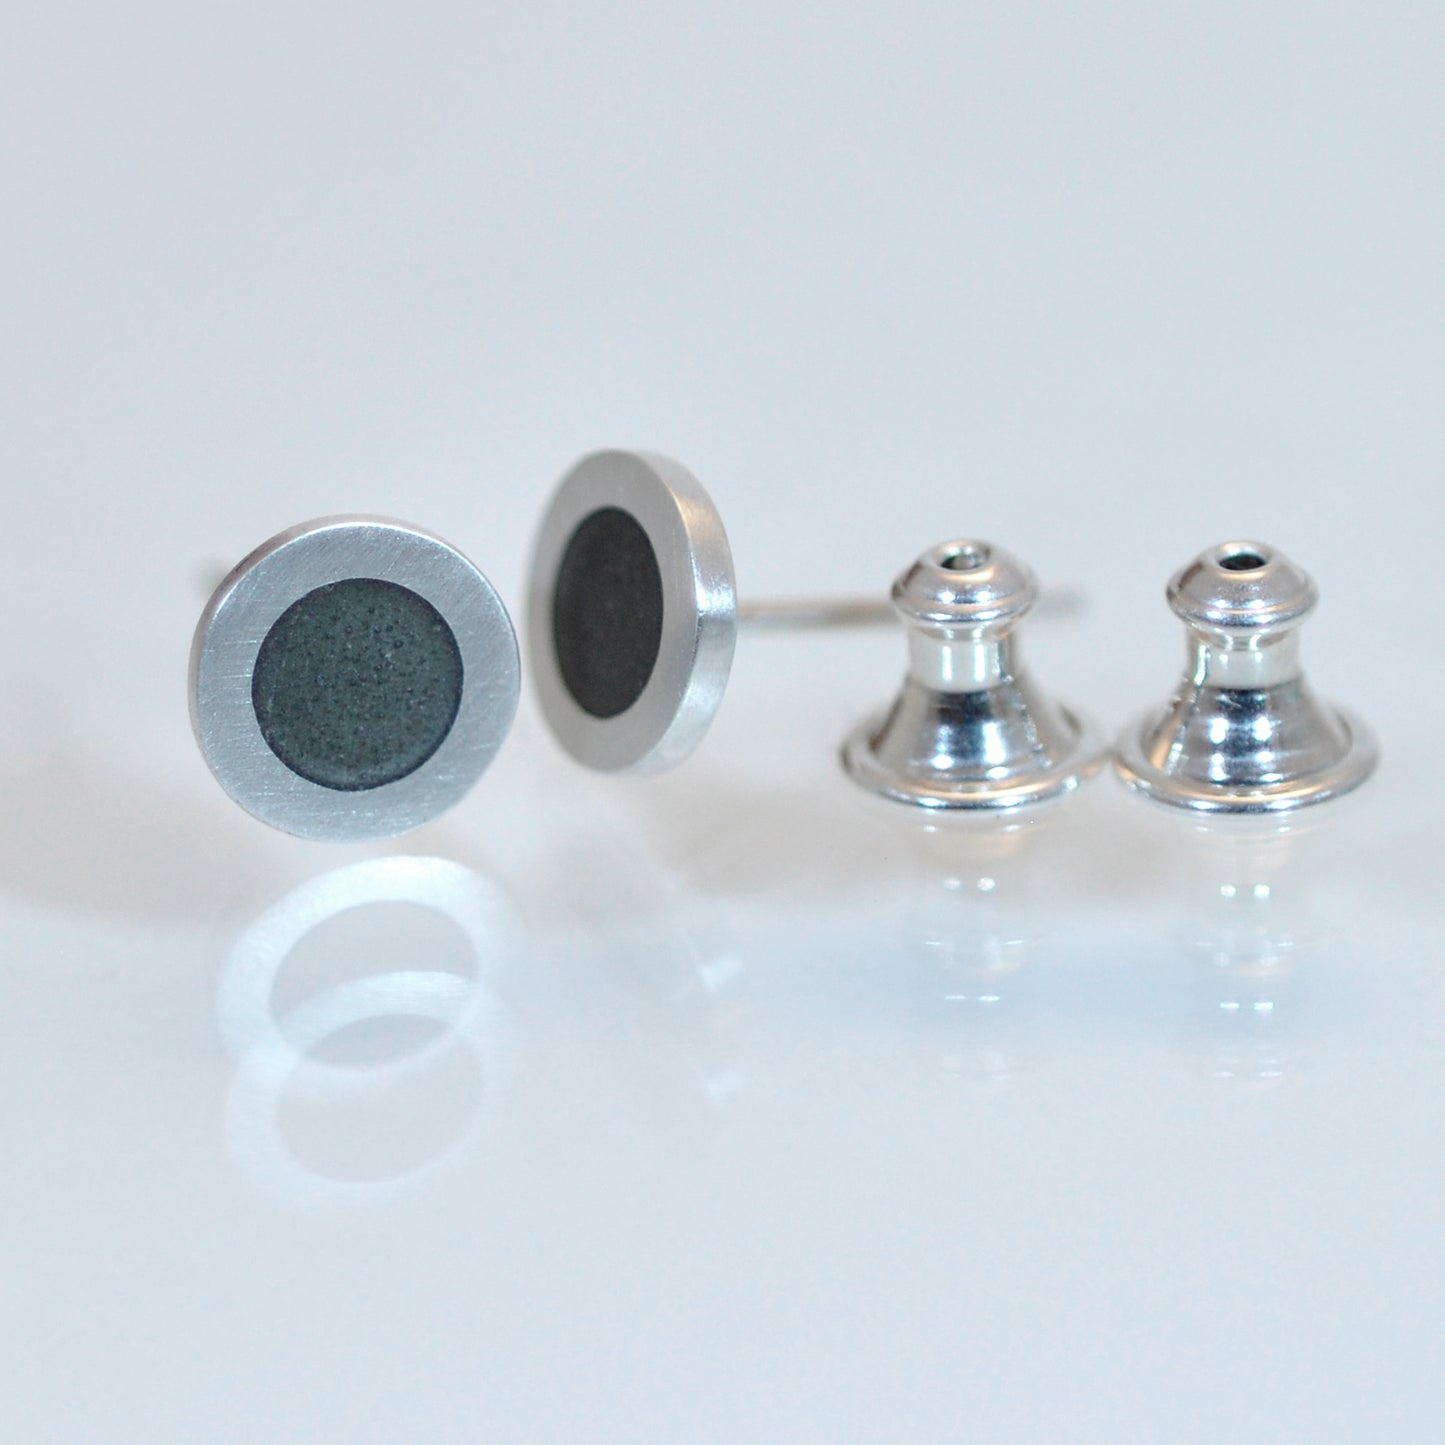 Small round silver flat ear studs, earth grey